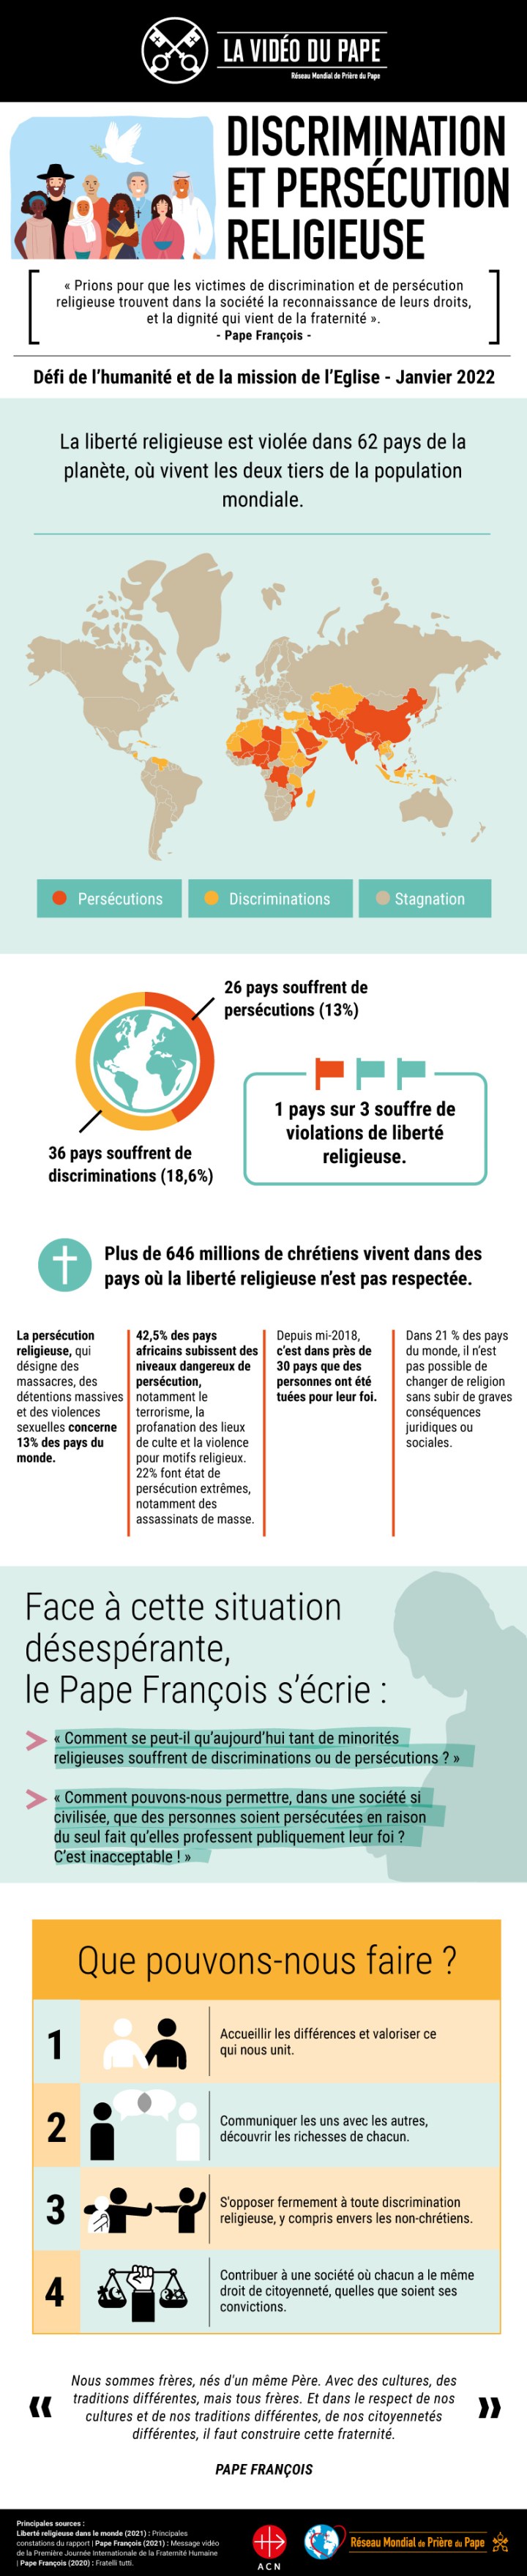 Infographic-TPV-1-2022-FR-Discrimination-et-persecution-religieuse.jpg